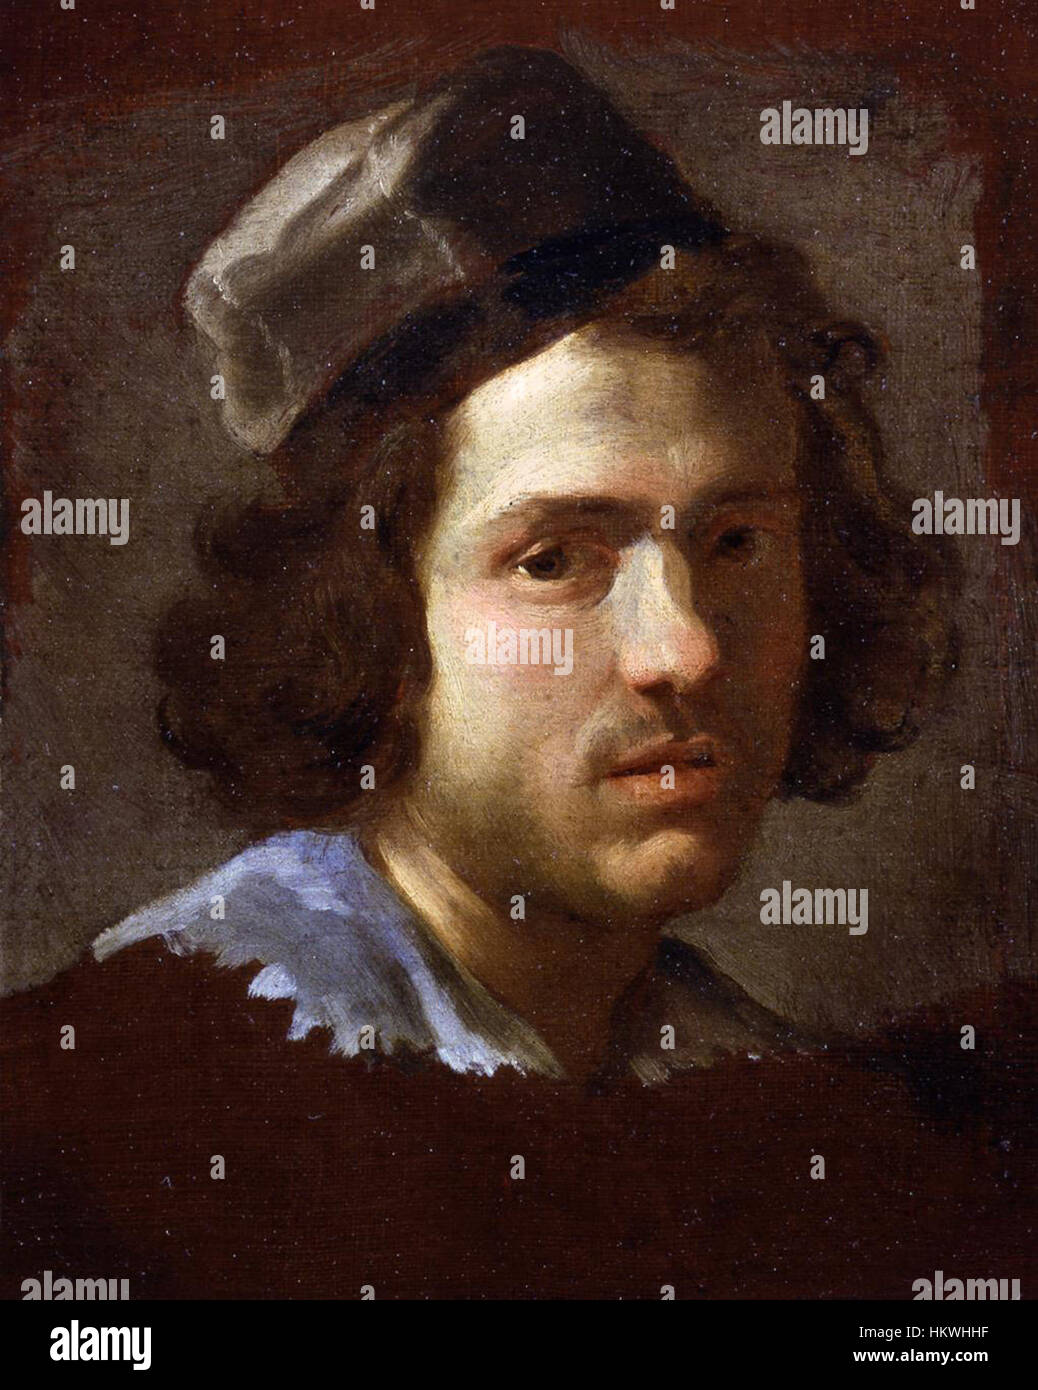 Gian Lorenzo Bernini - Ritratto di Nicolas Poussin Stockfotografie - Alamy